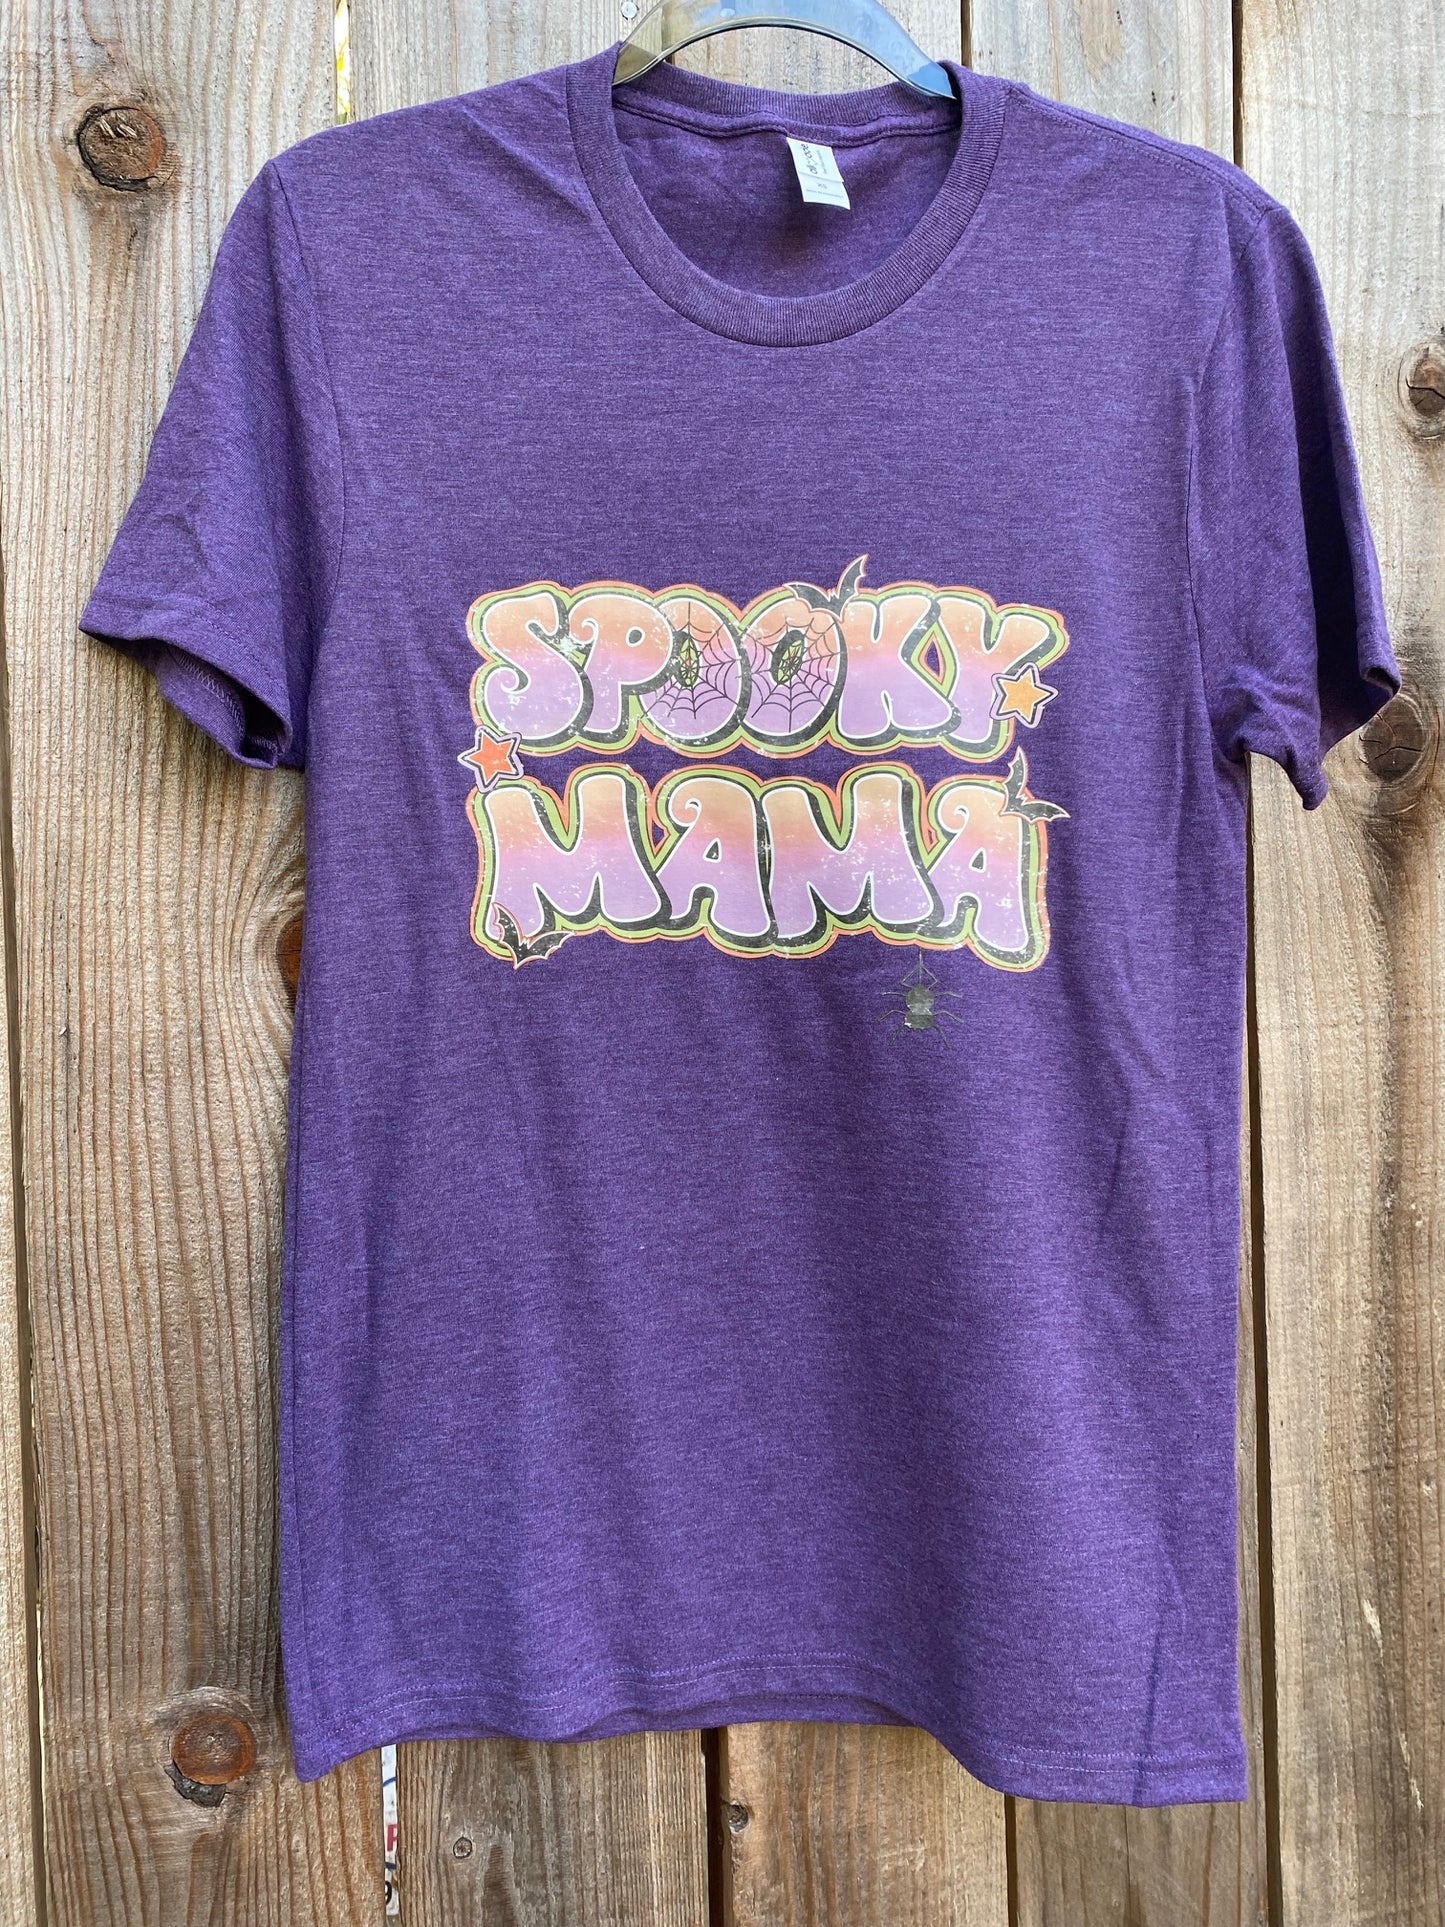 Spooky Mama Purple Sustainably Made T-Shirt